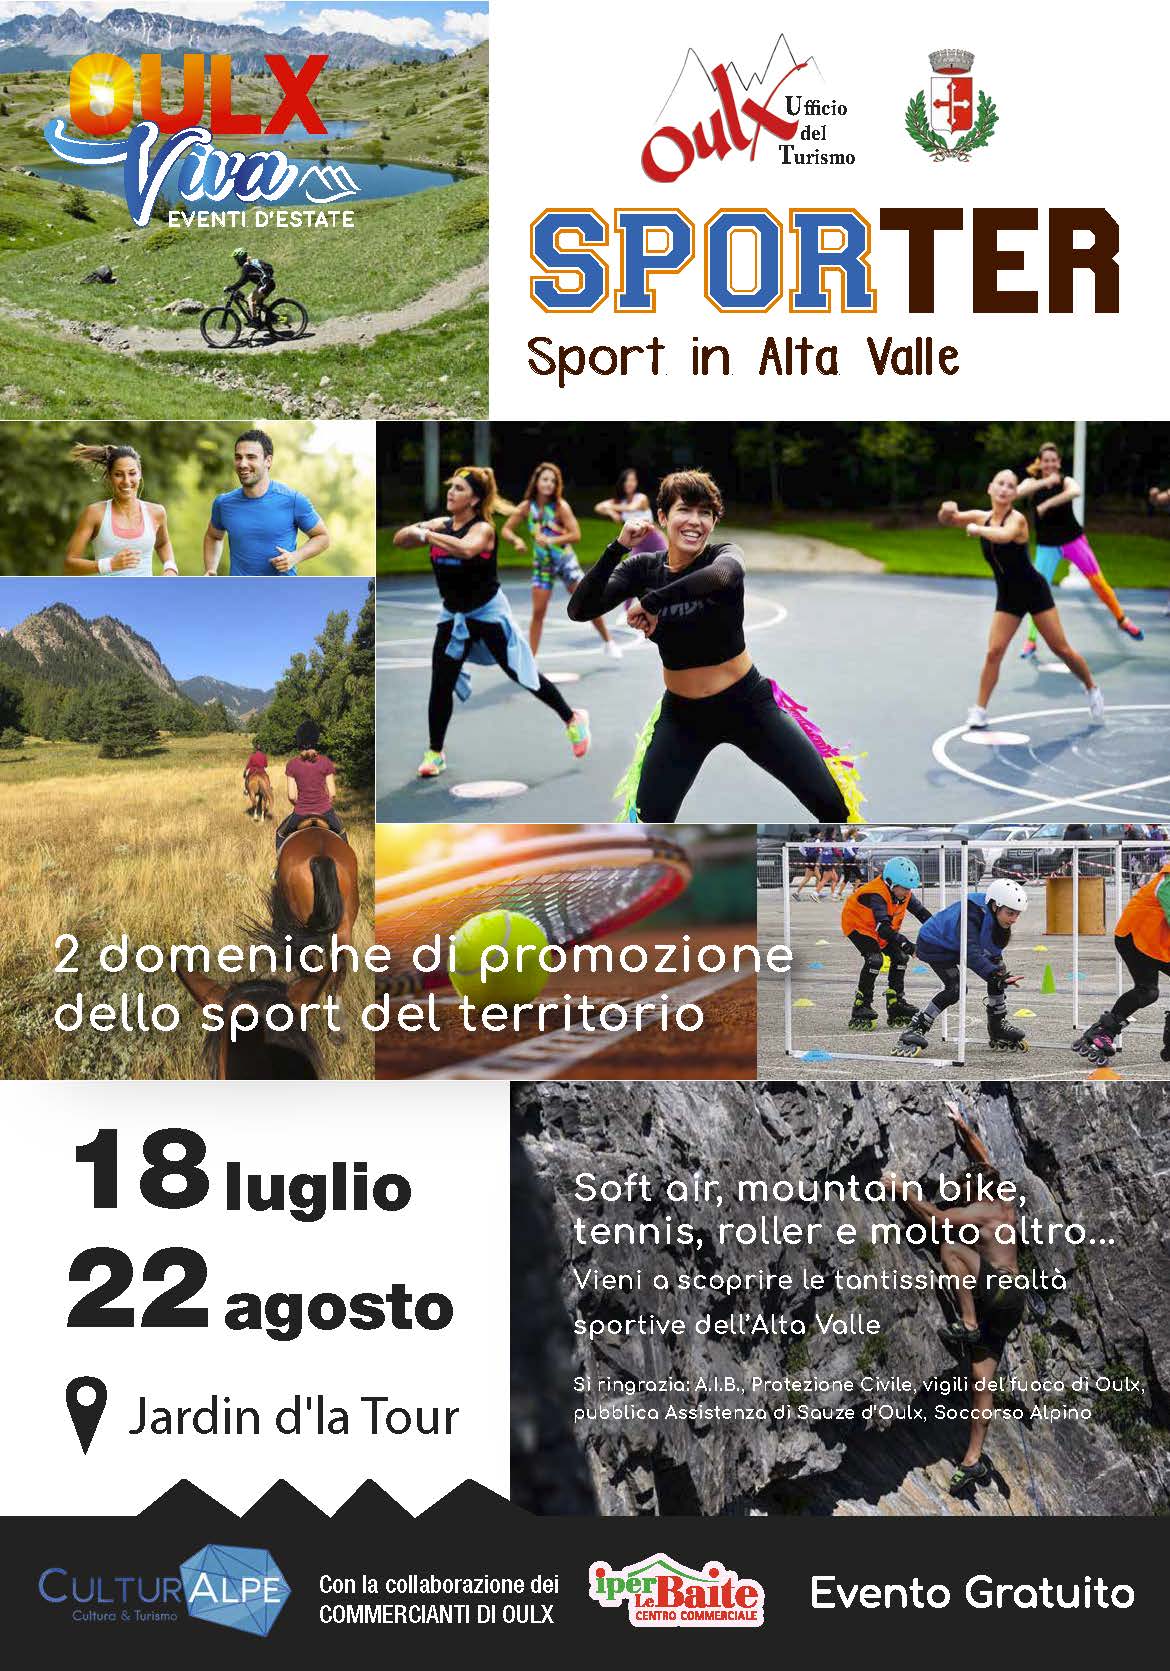 SPORTER, Sport in Alta Valle